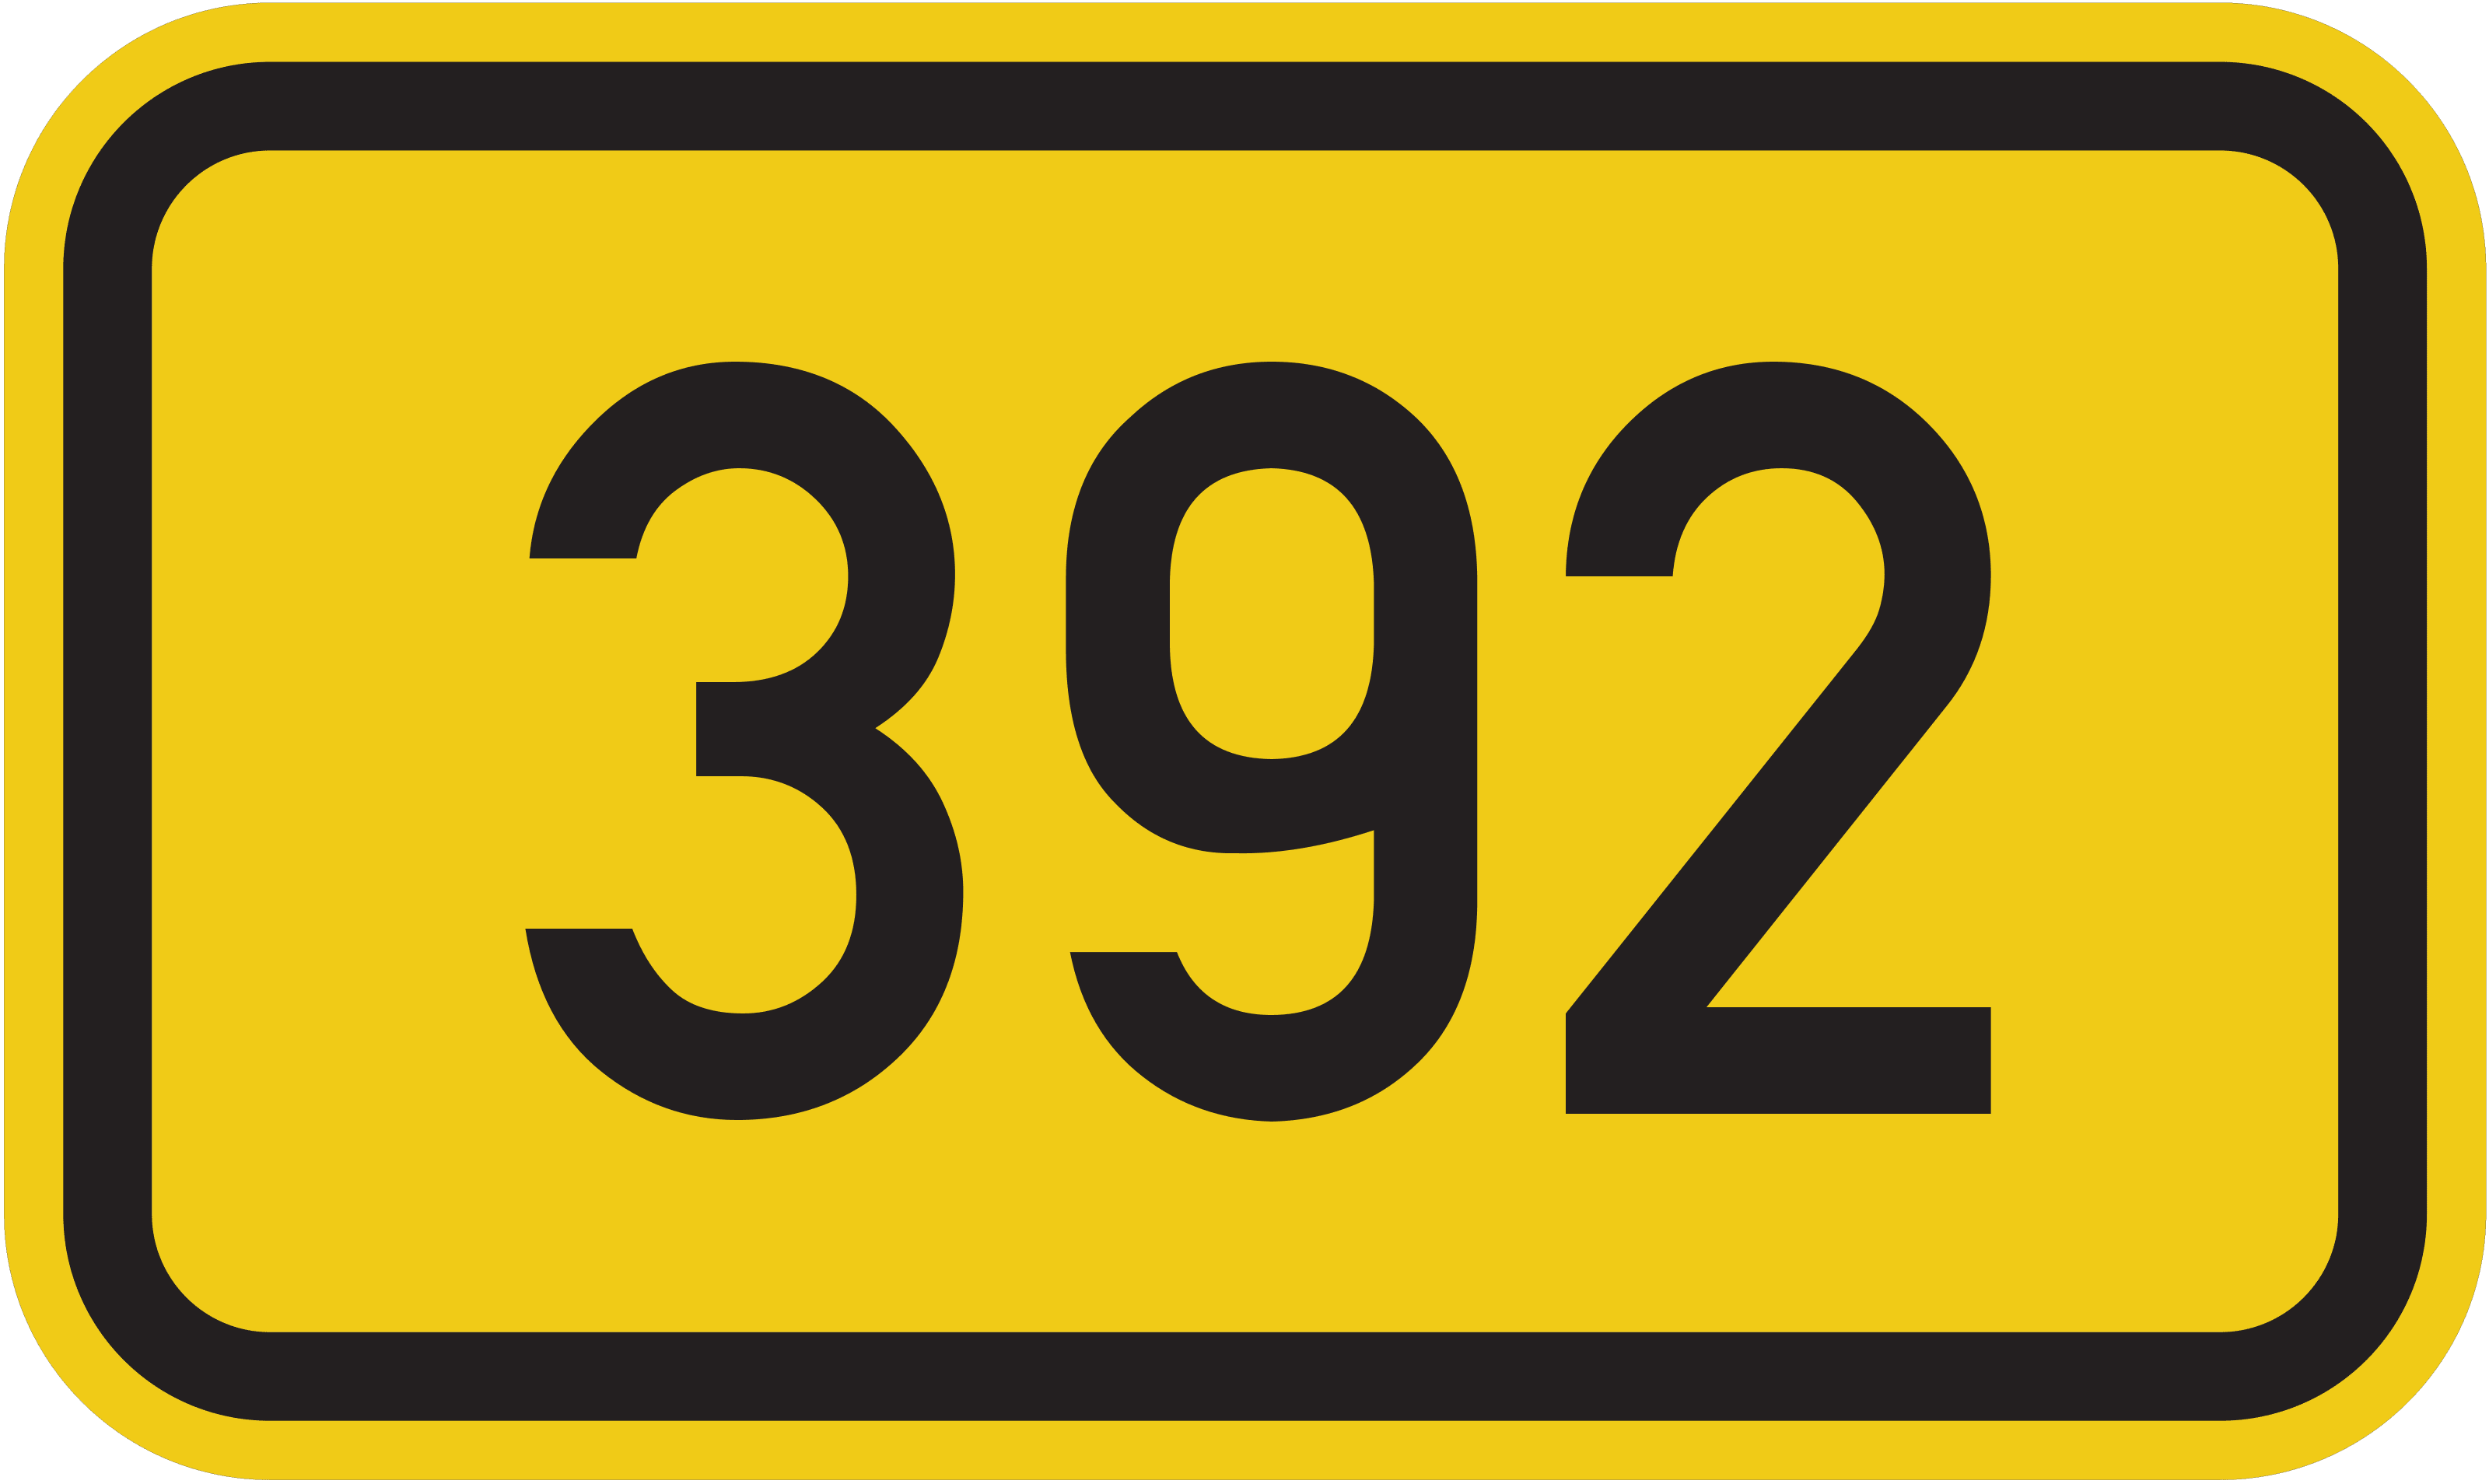 Straßenschild Bundesstraße 392